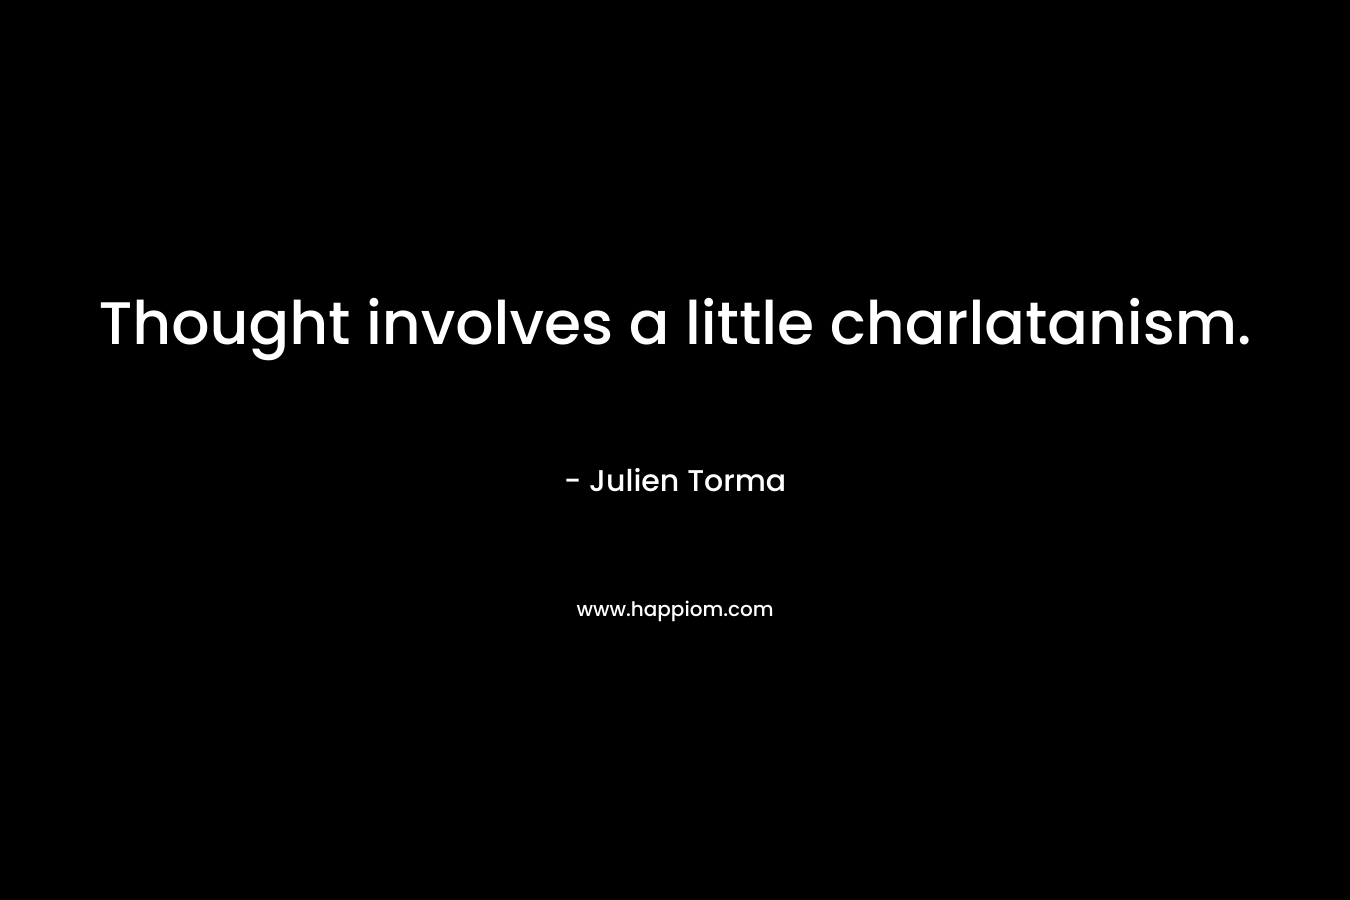 Thought involves a little charlatanism. – Julien Torma